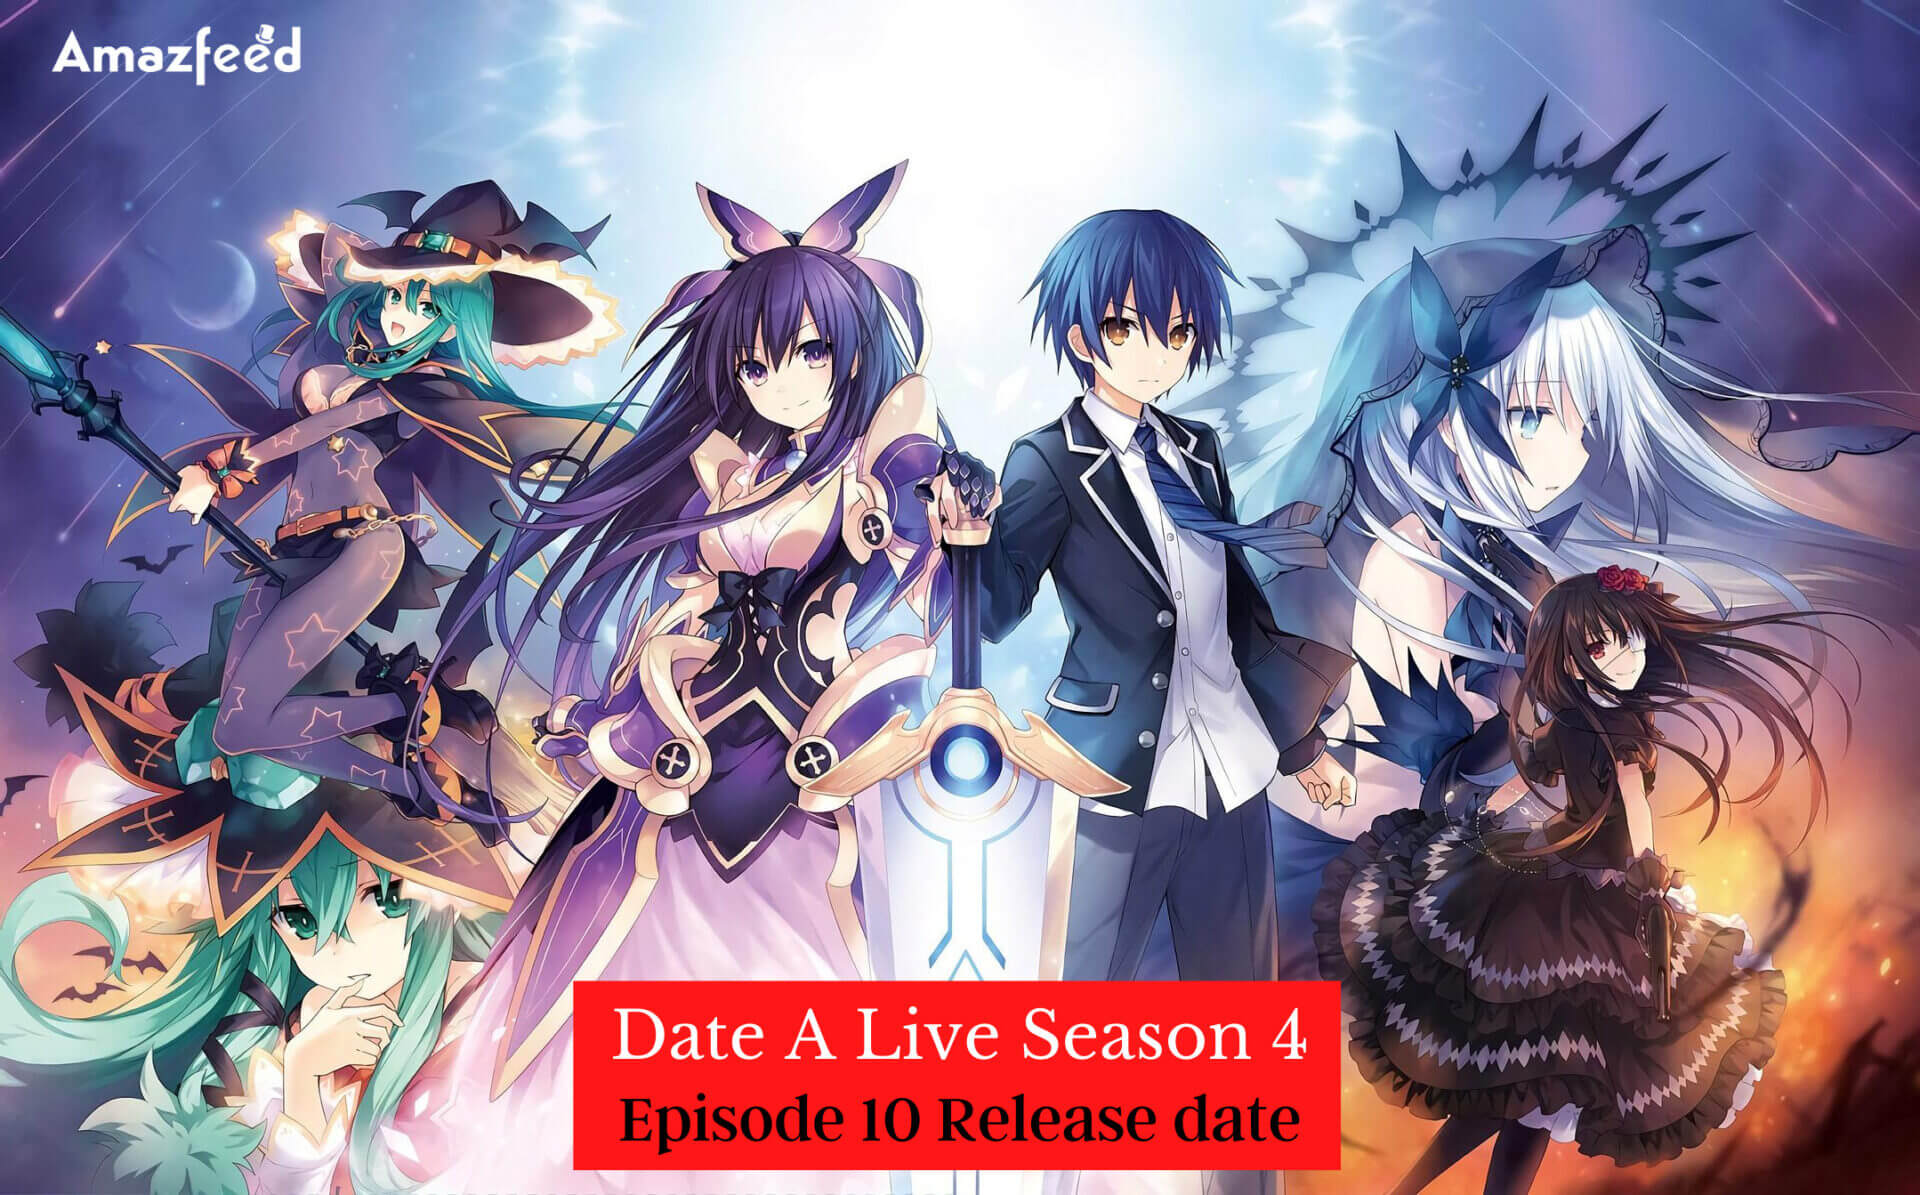 Date A Live Season 4 episode 10 release date